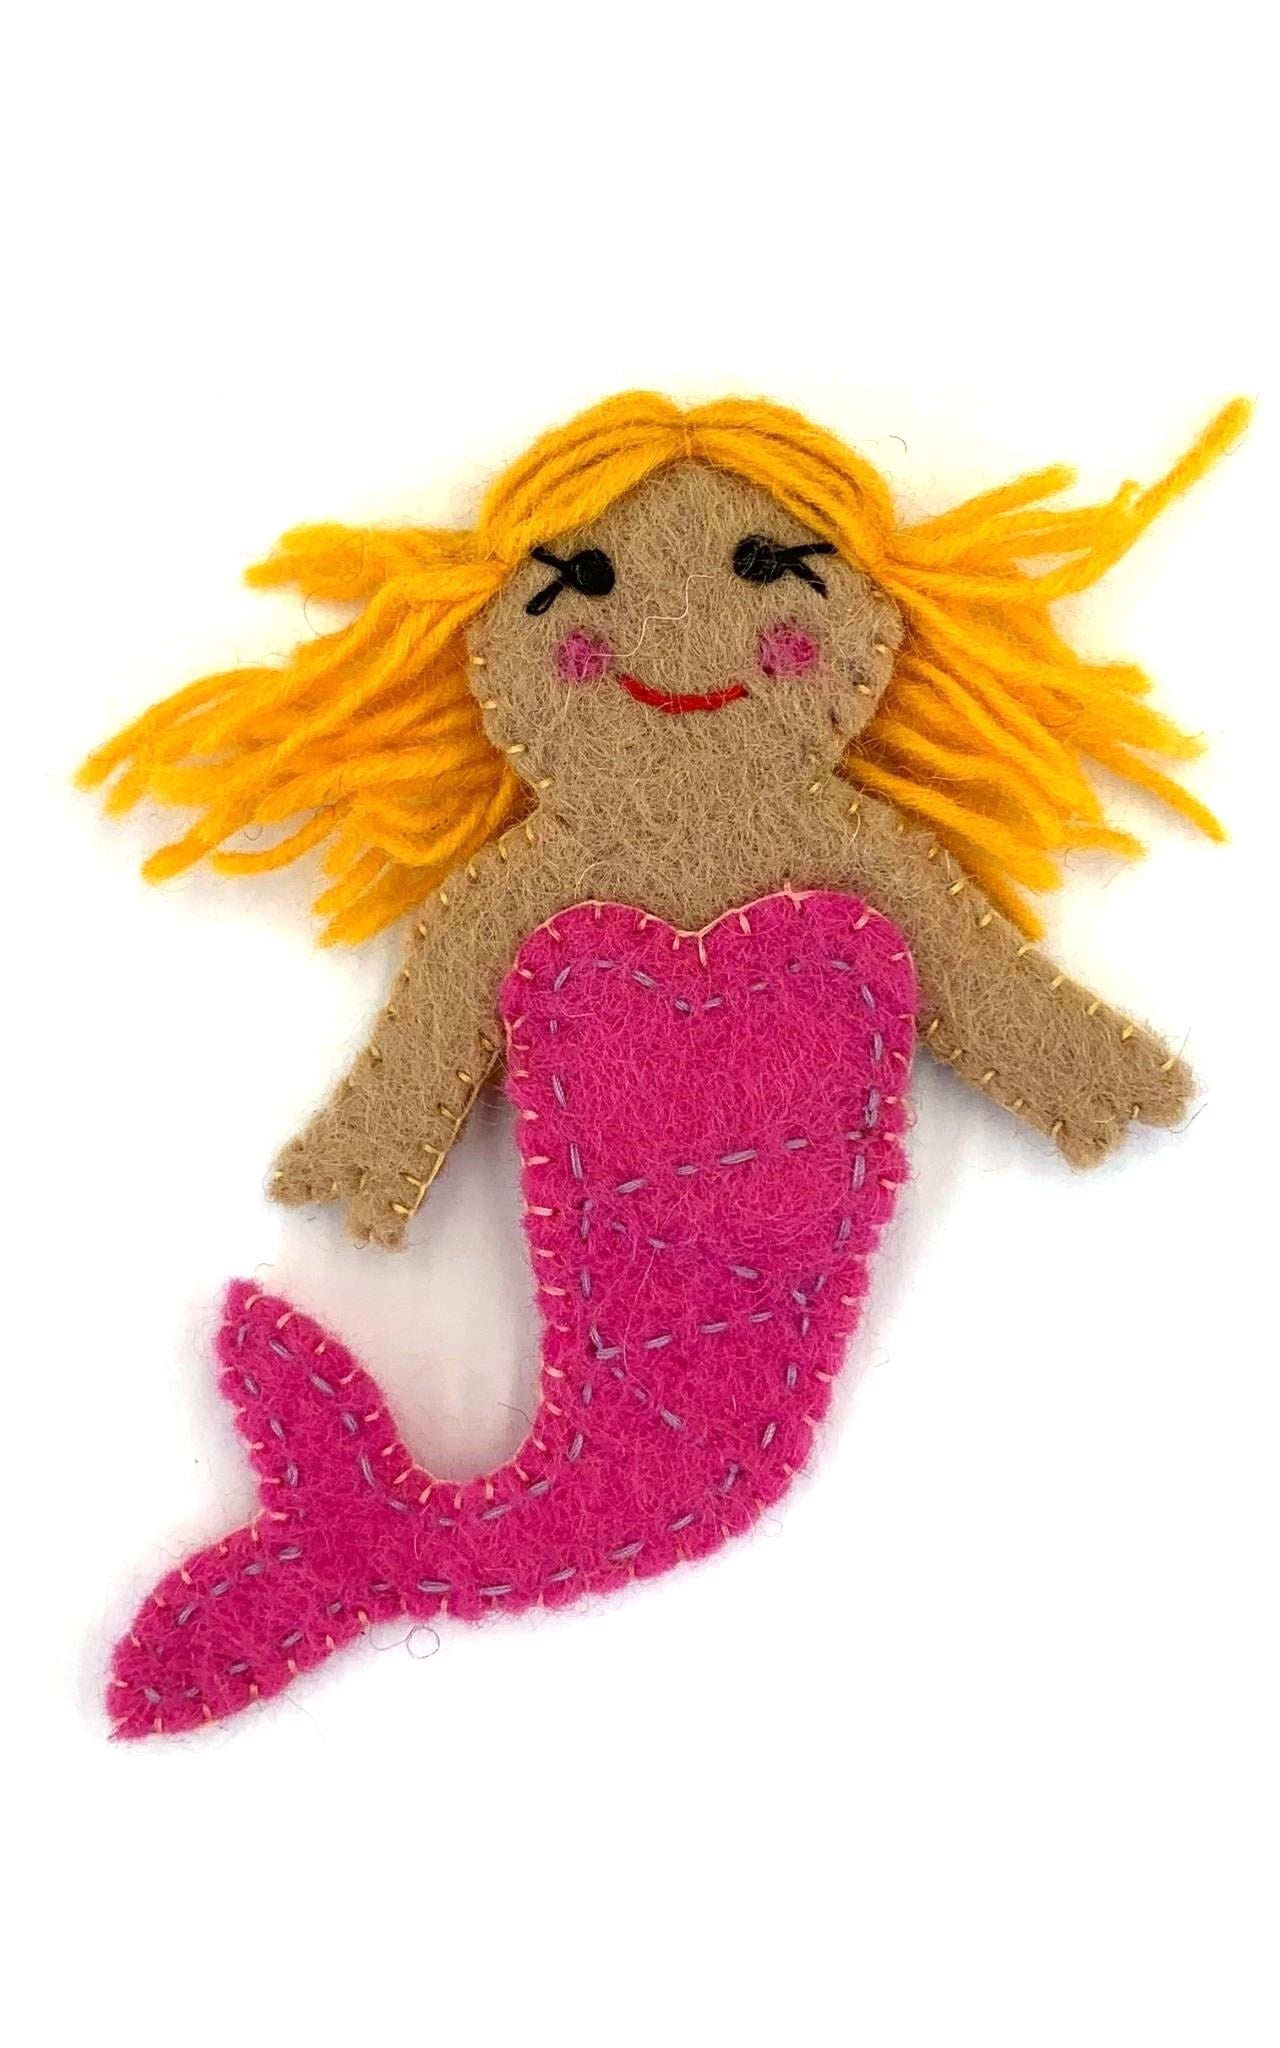 Surya Australia Ethical Wool Felt Finger Puppets made in Nepal - Pink Mermaid